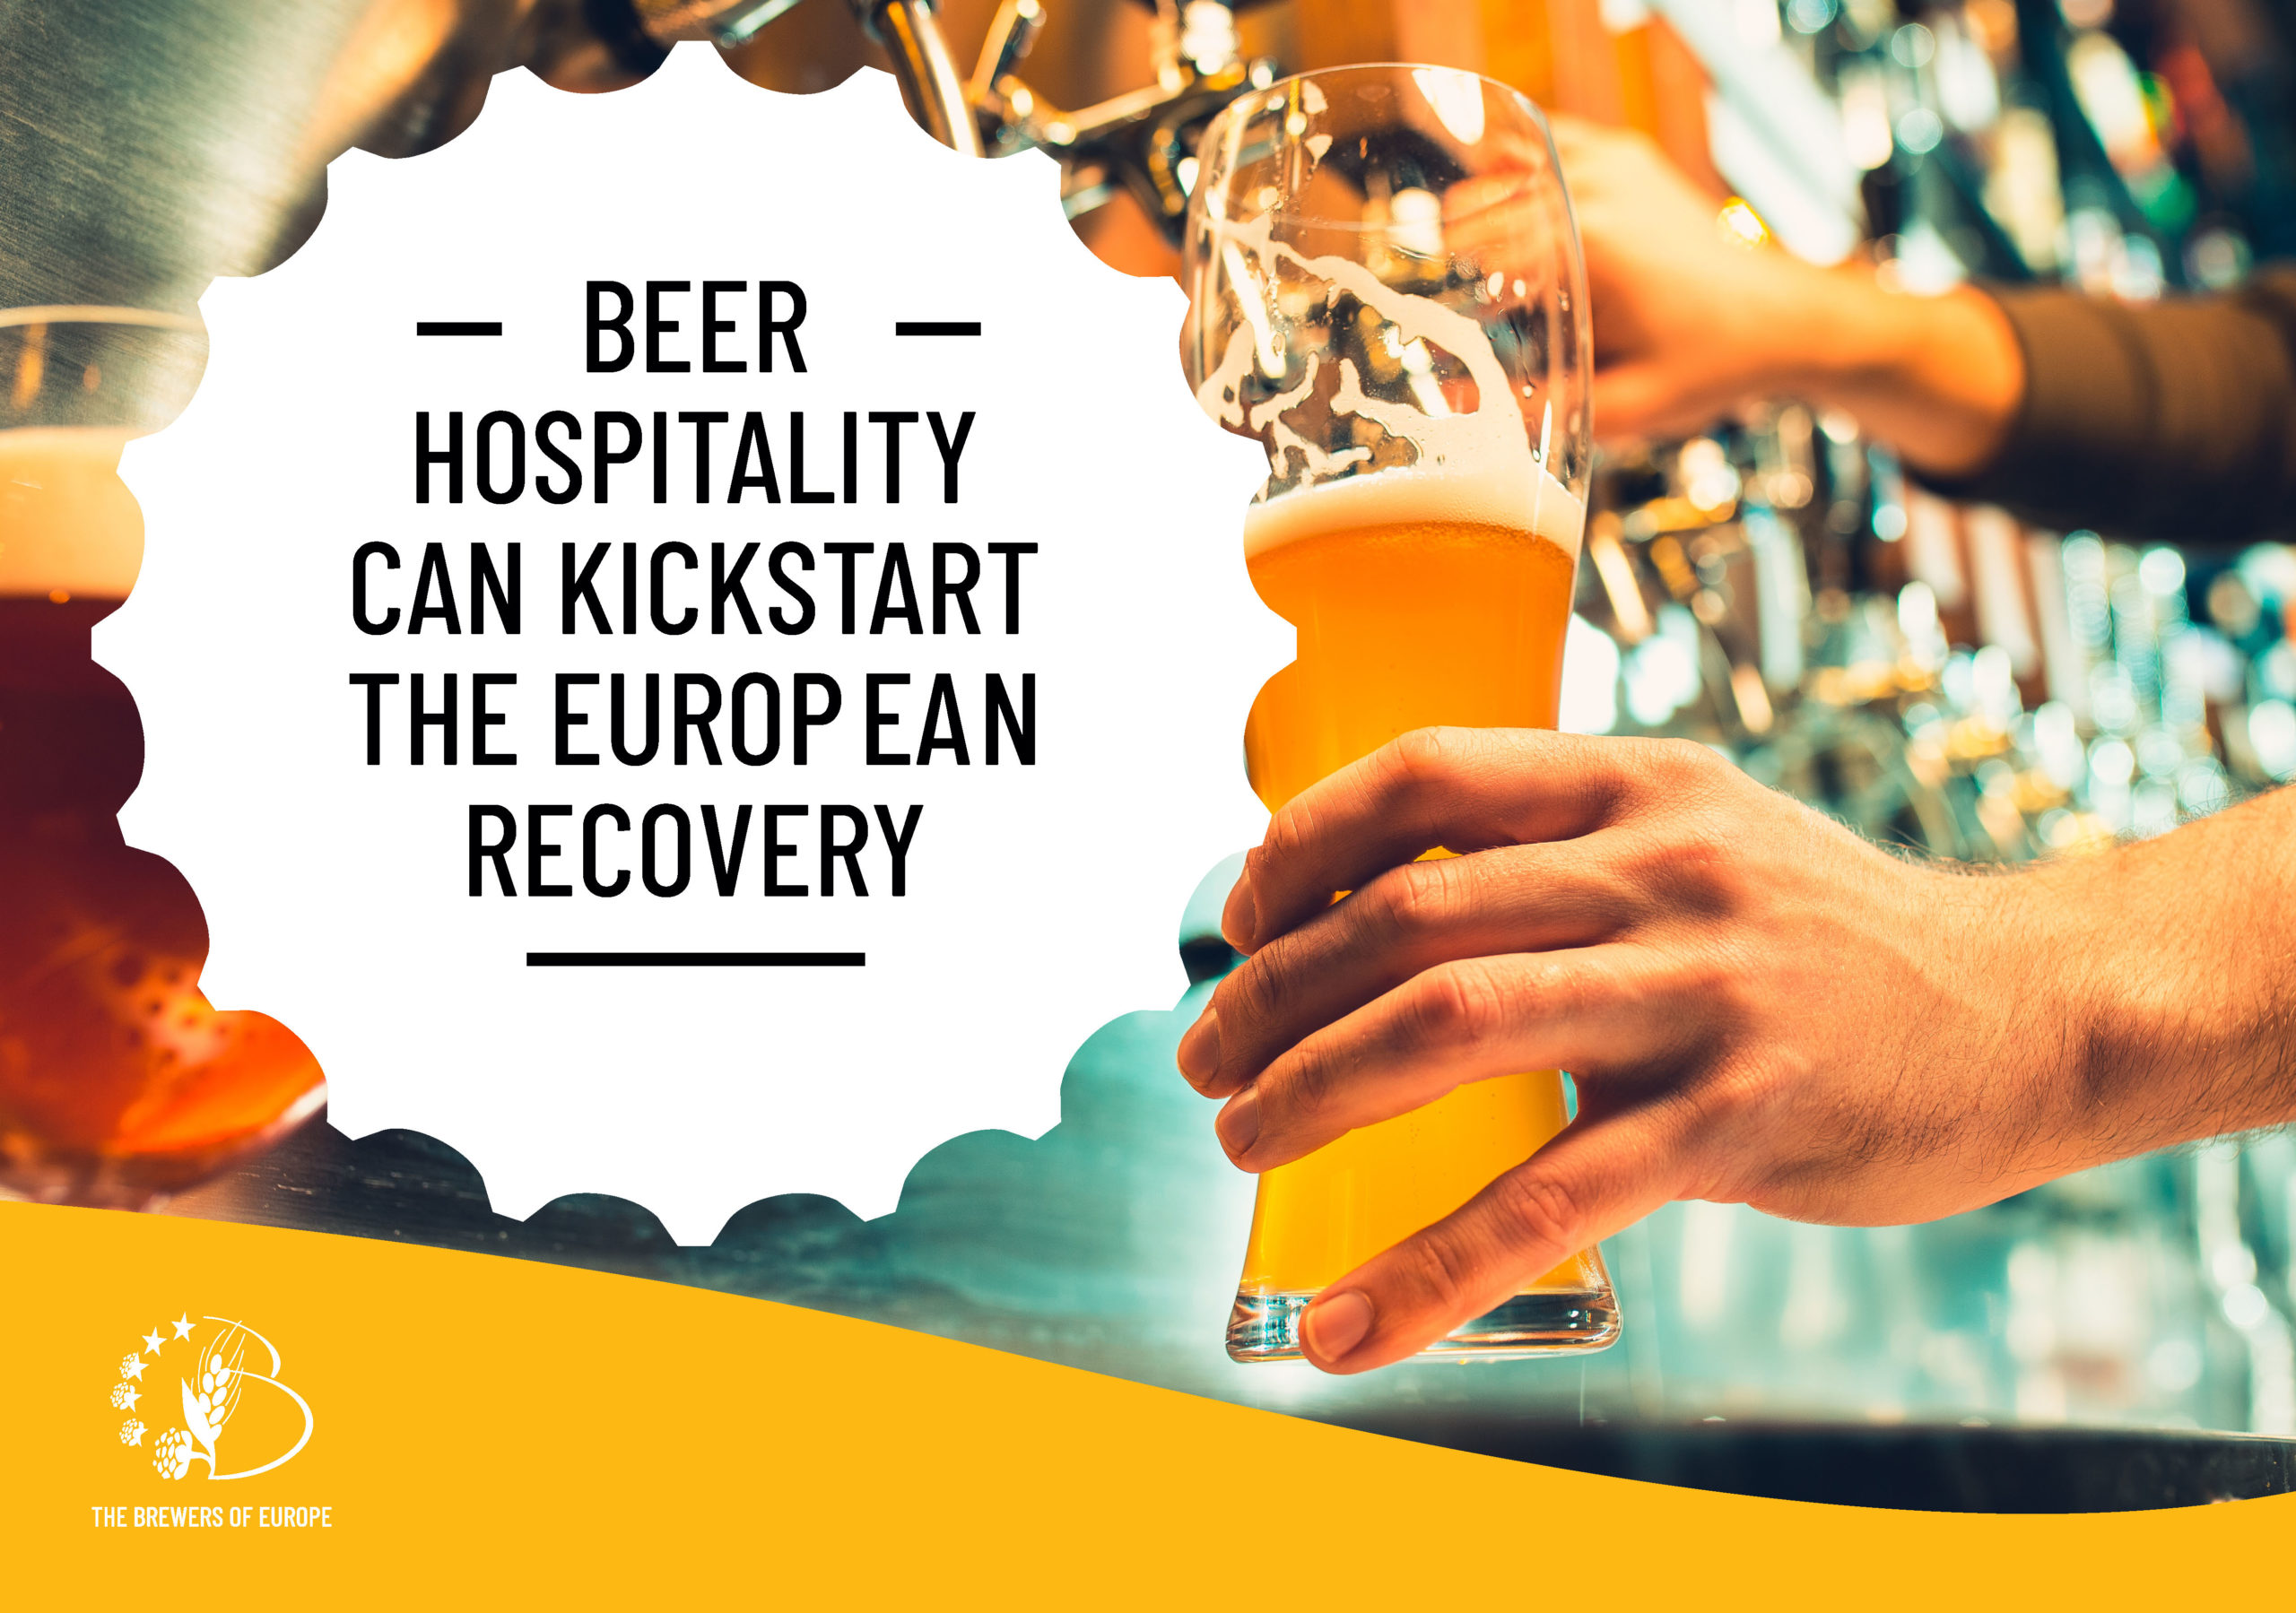 Beer hospitality can kickstart the European economy